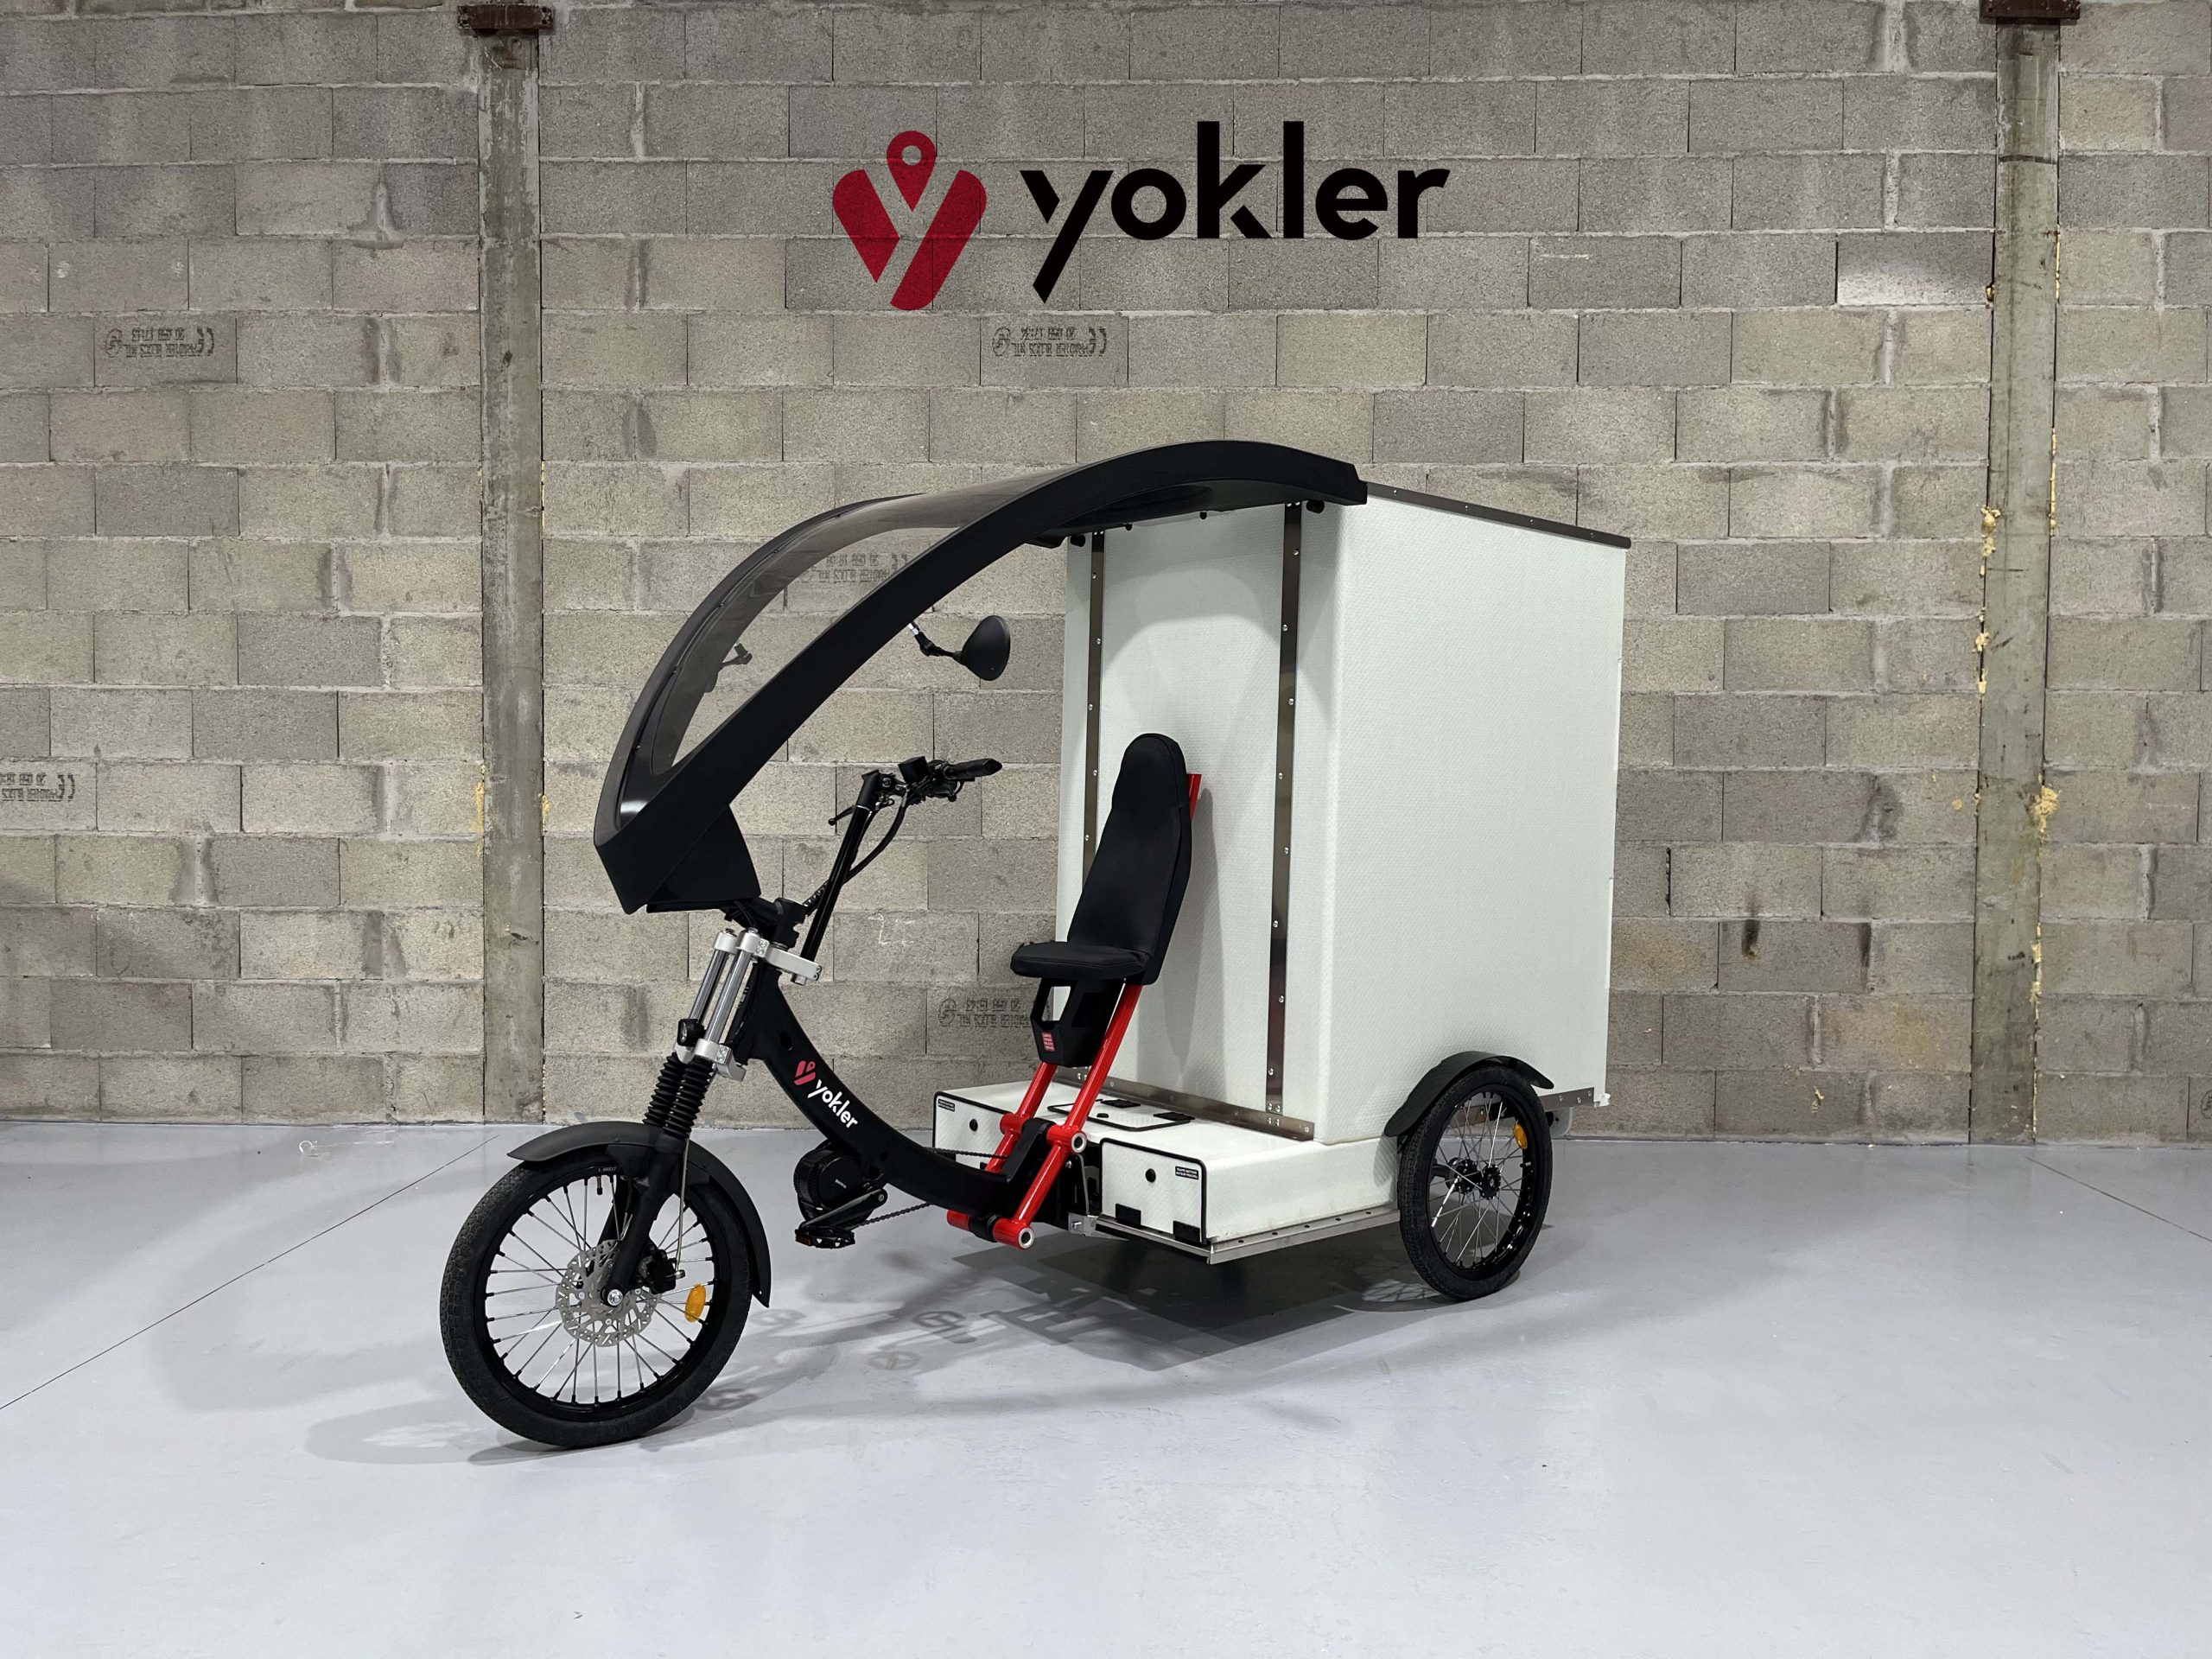 Yokler XL cargobike livraison dernier km